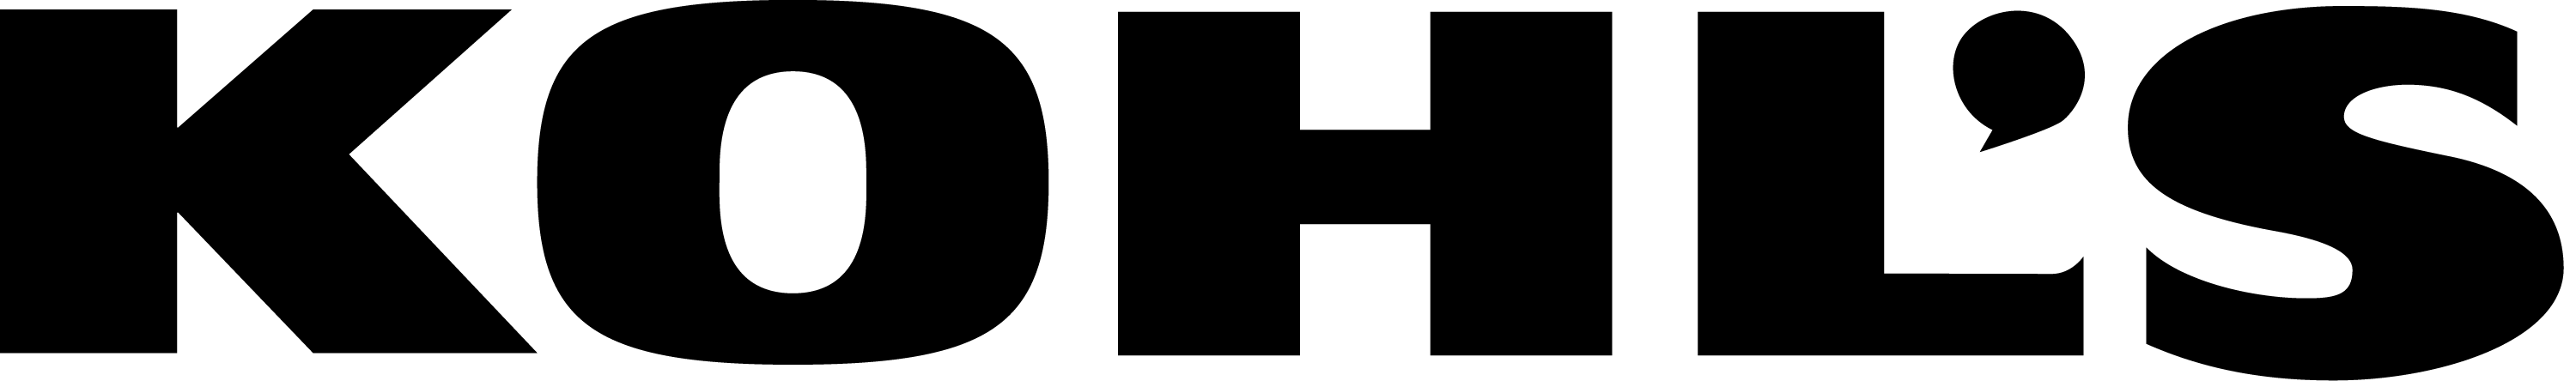 Kohls Logo PNG Pic